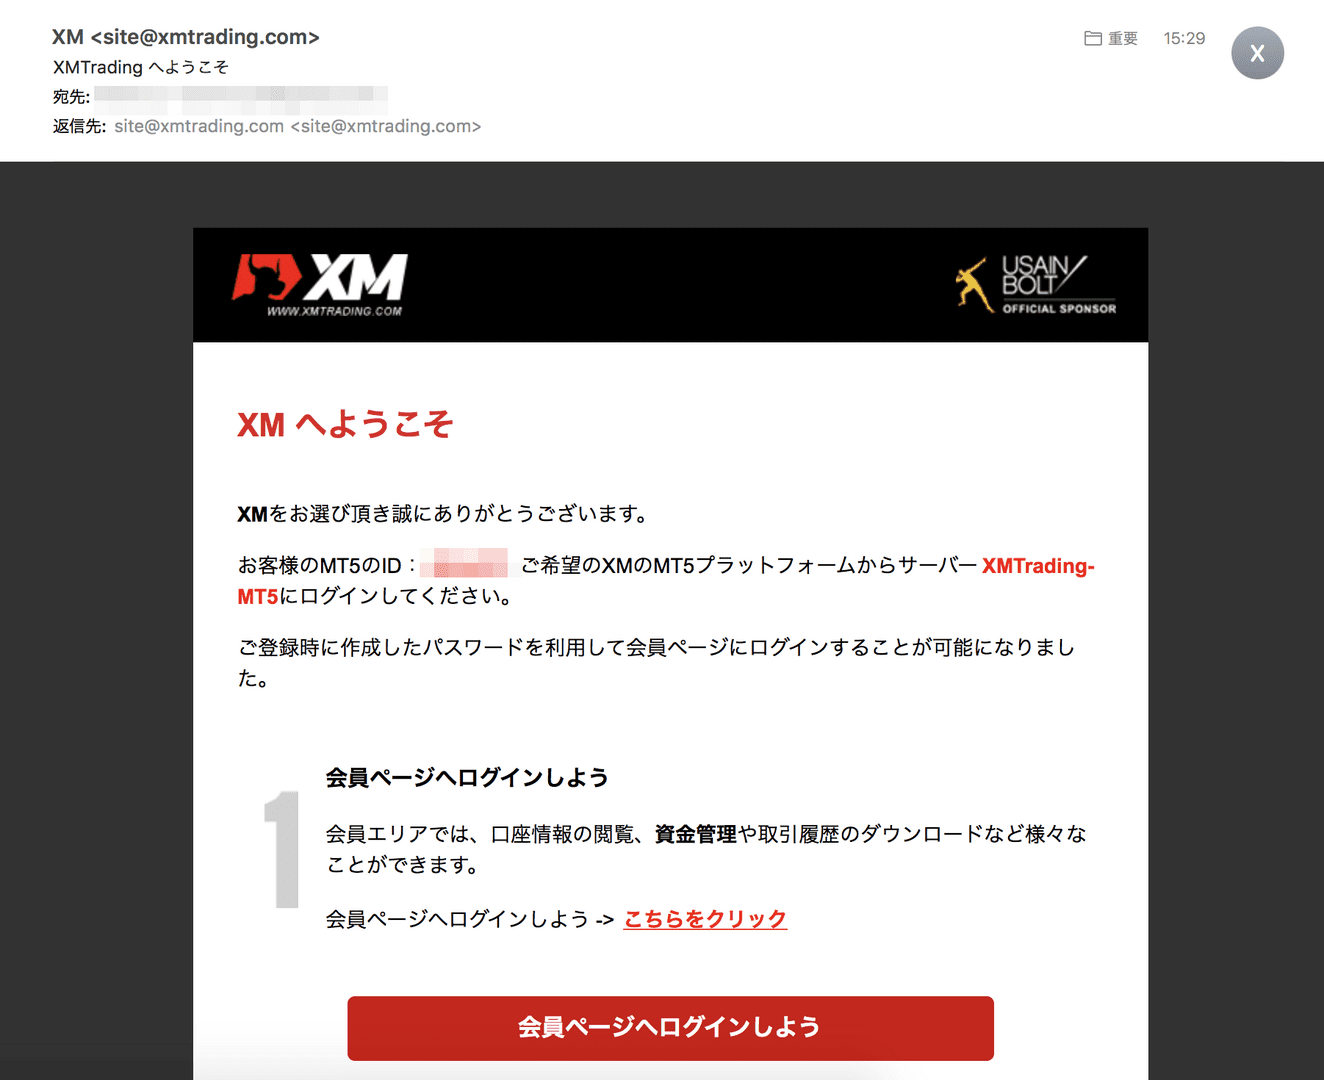 XM追加口座 - 口座開設完了メール